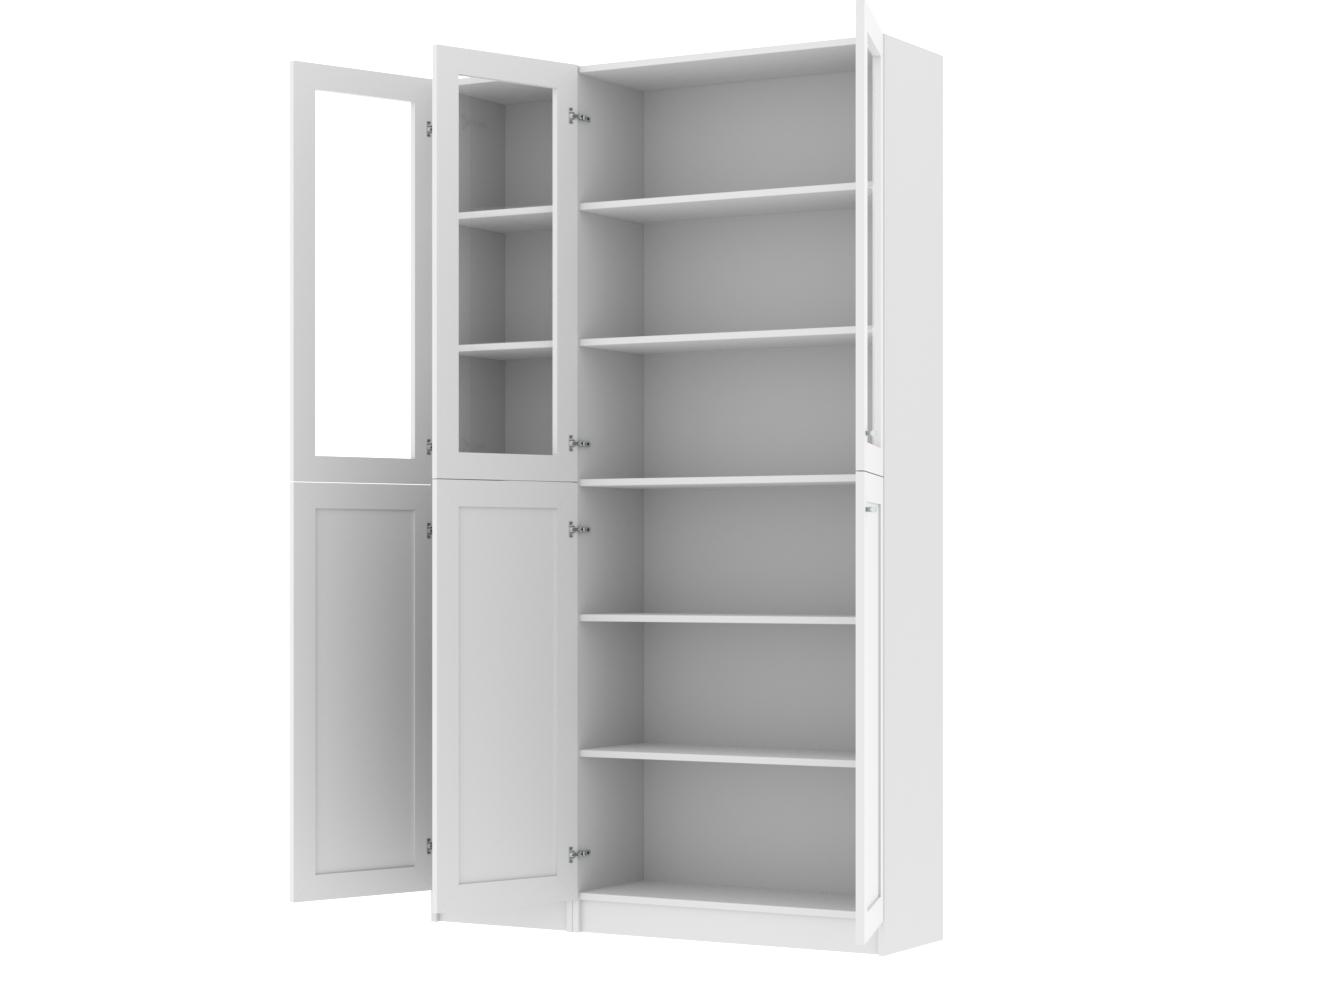  Книжный шкаф Билли 338 white desire ИКЕА (IKEA) изображение товара